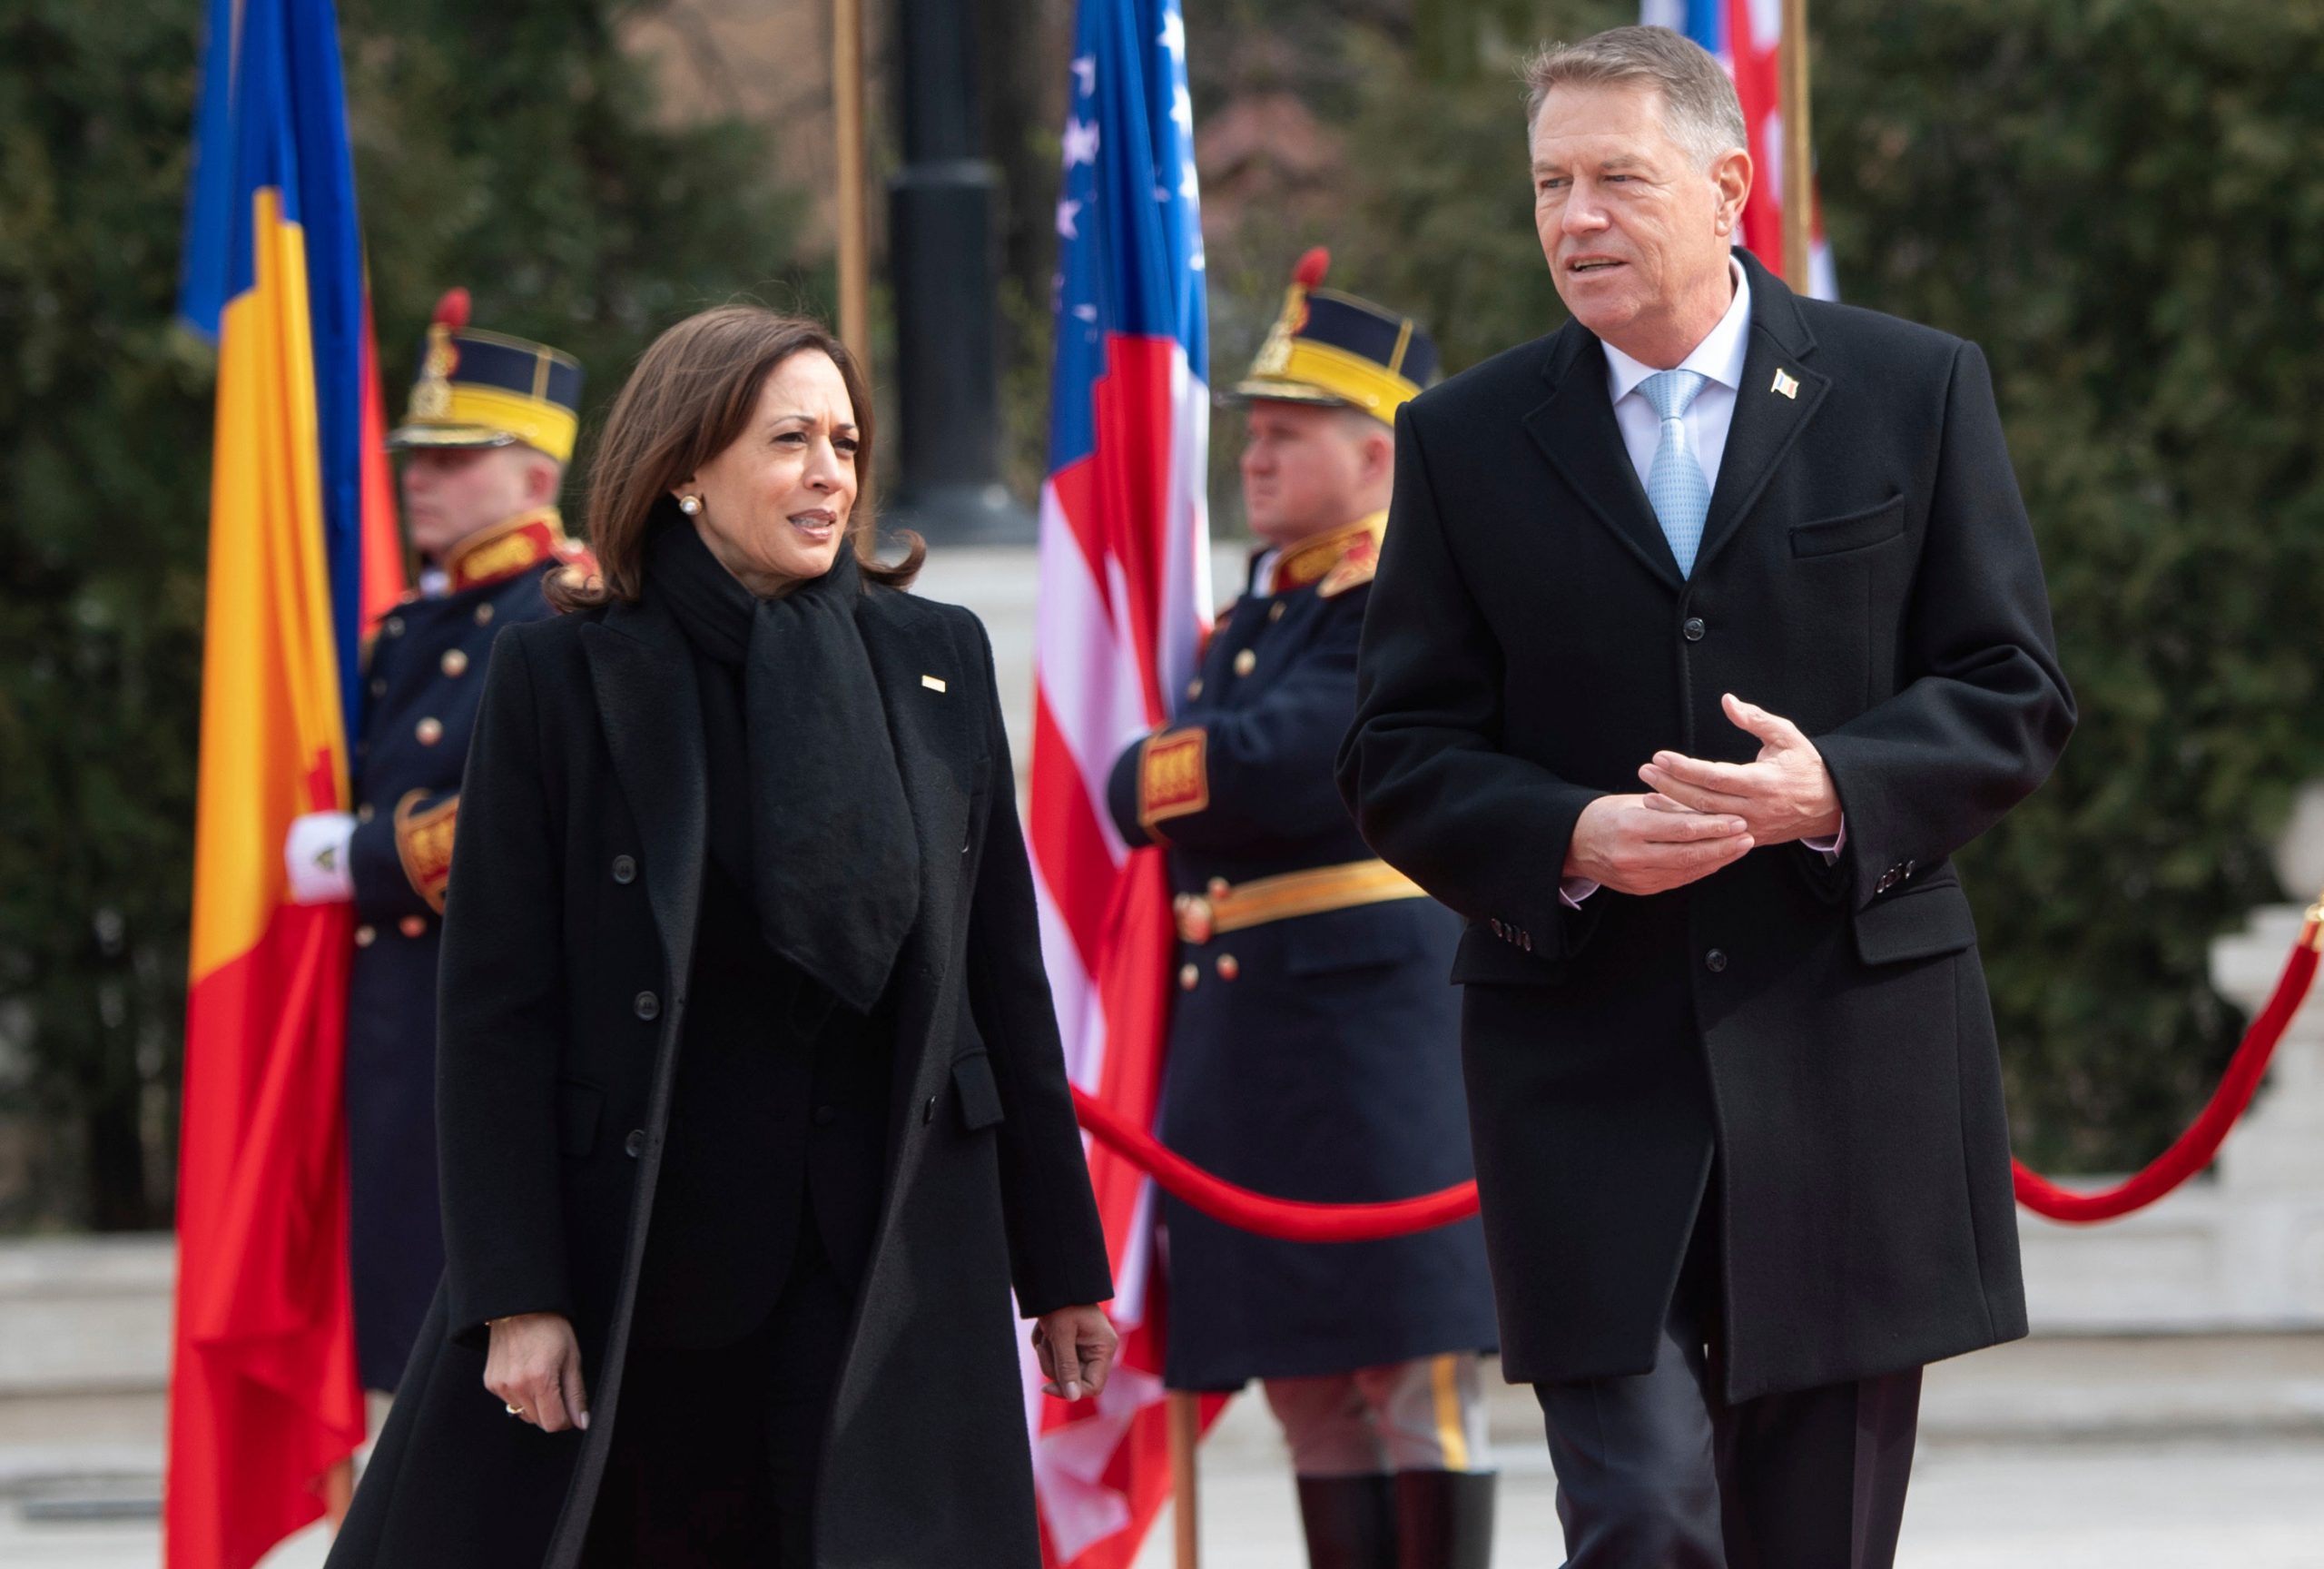 US Vice President Kamala Harris meets Romanian president over Ukraine refugee crisis